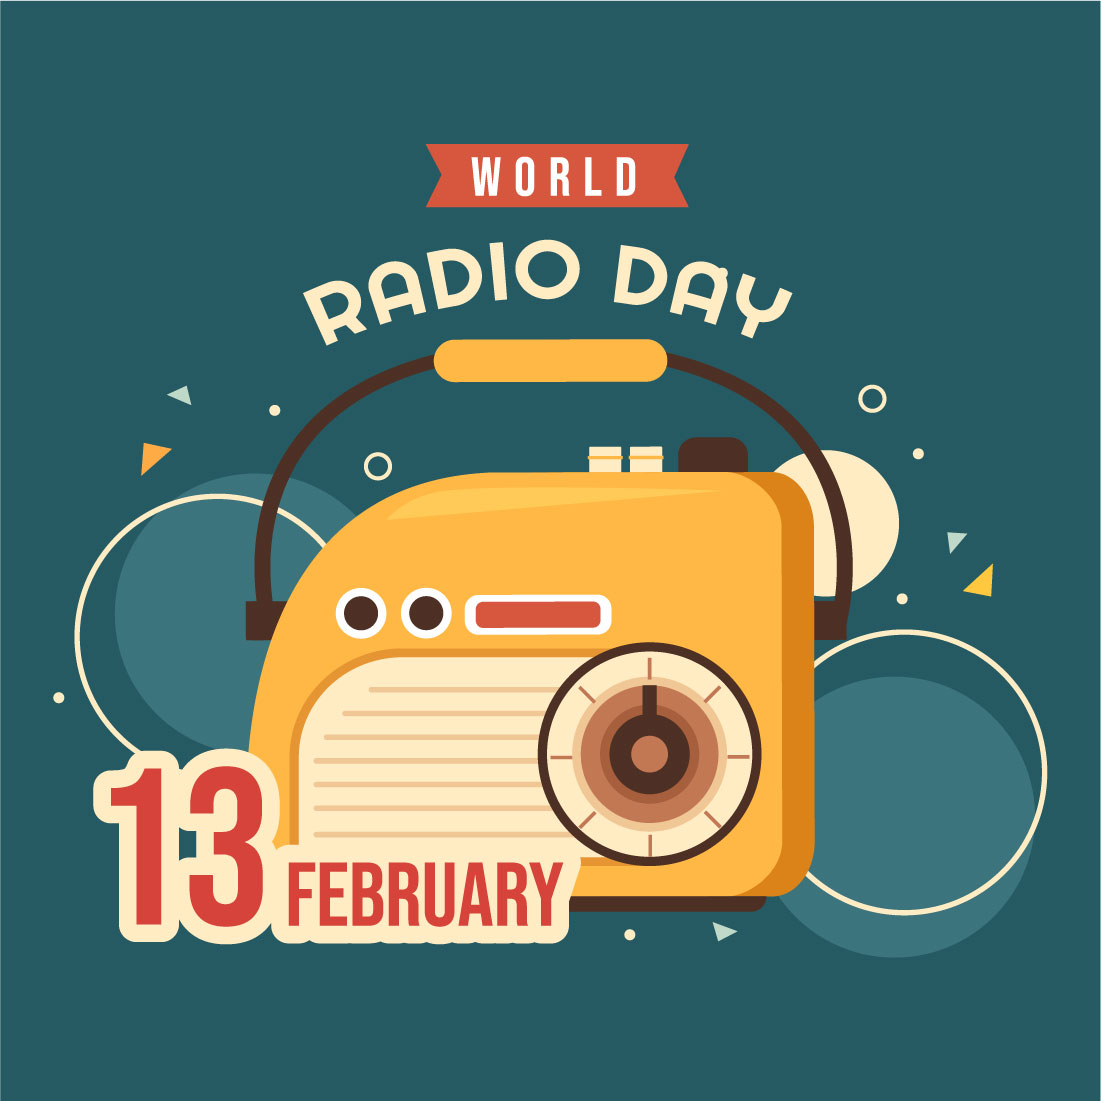 Radio Day Illustration Design cover image.